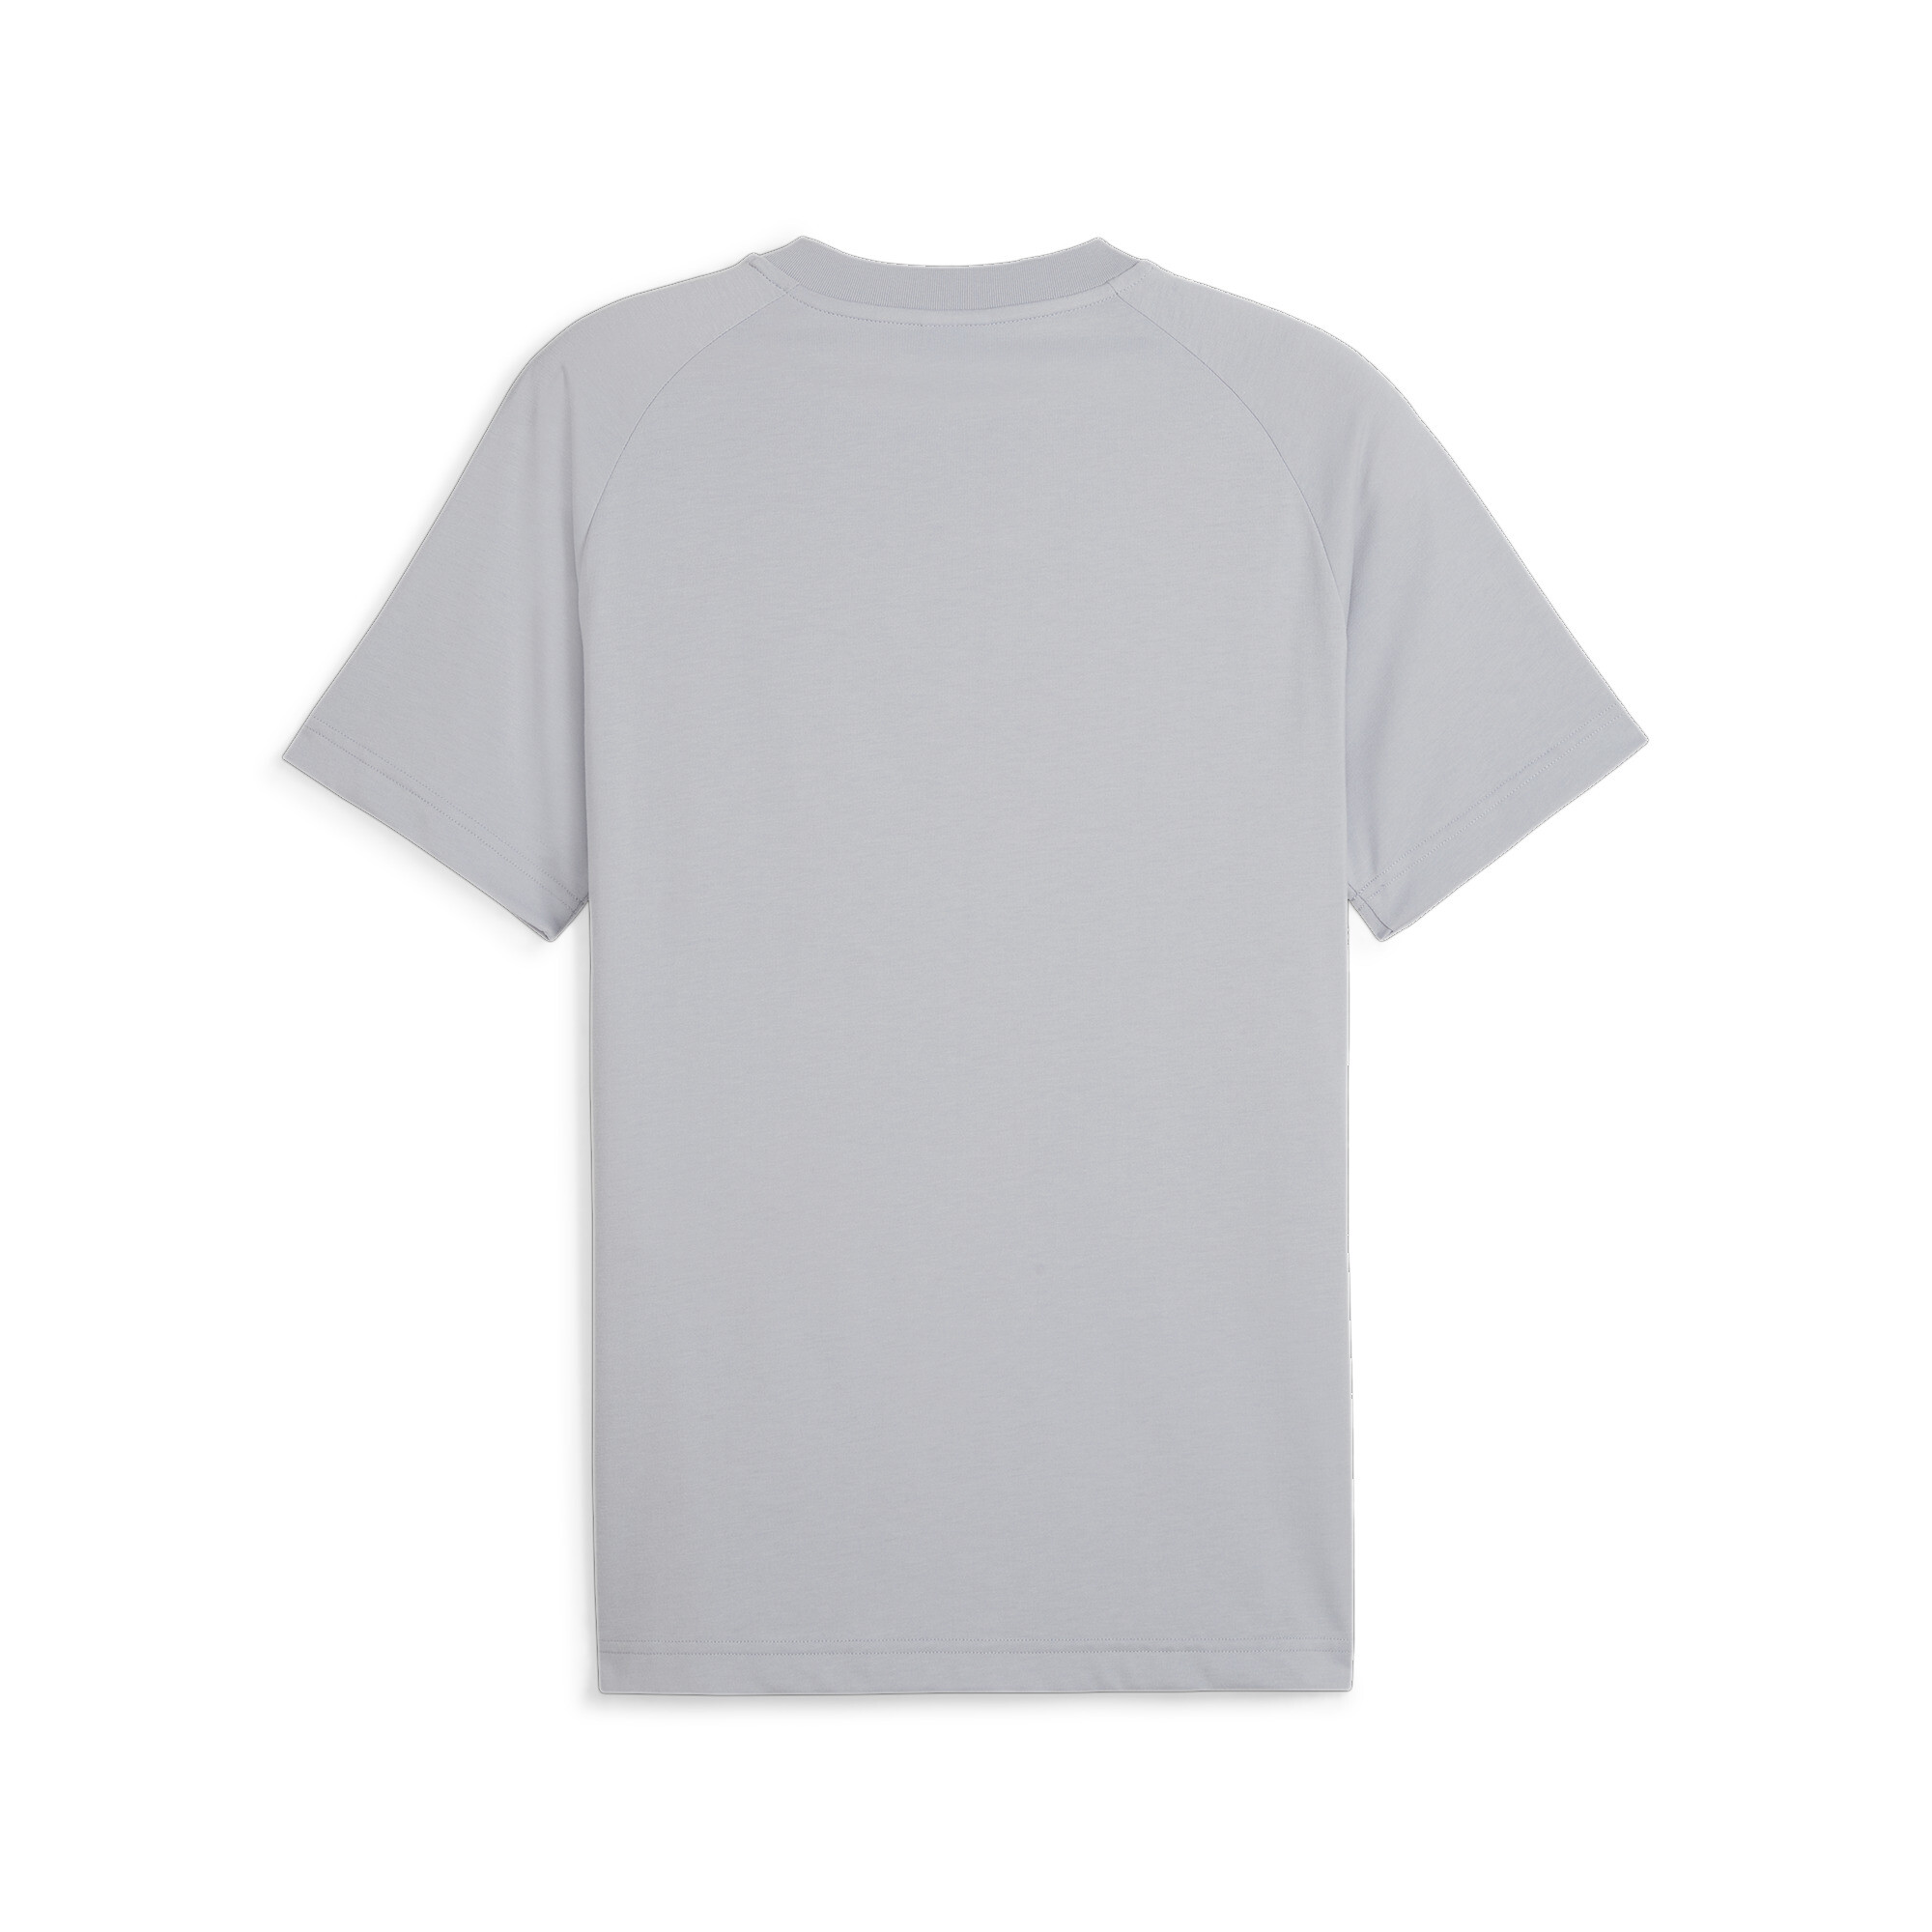 Men's PUMATECH Pocket T-Shirt In Gray, Size Medium